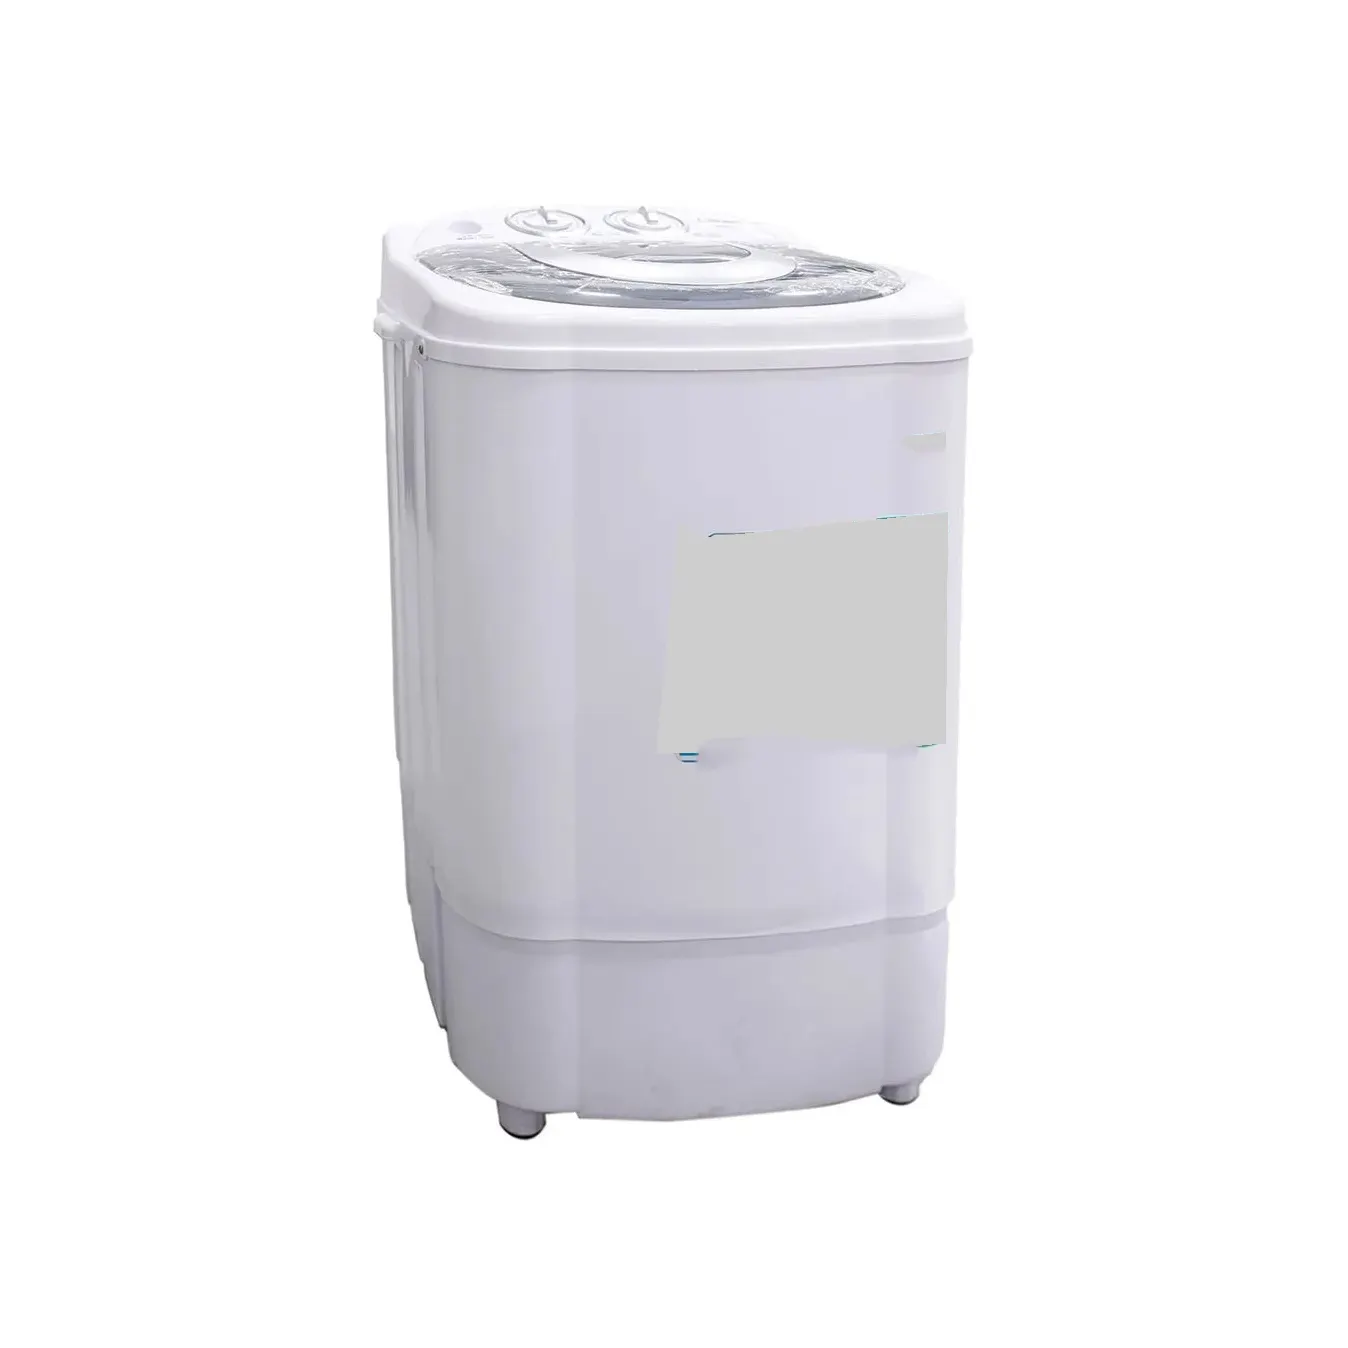 single tub washing machine/mini portable of semi automatic washer with dryer